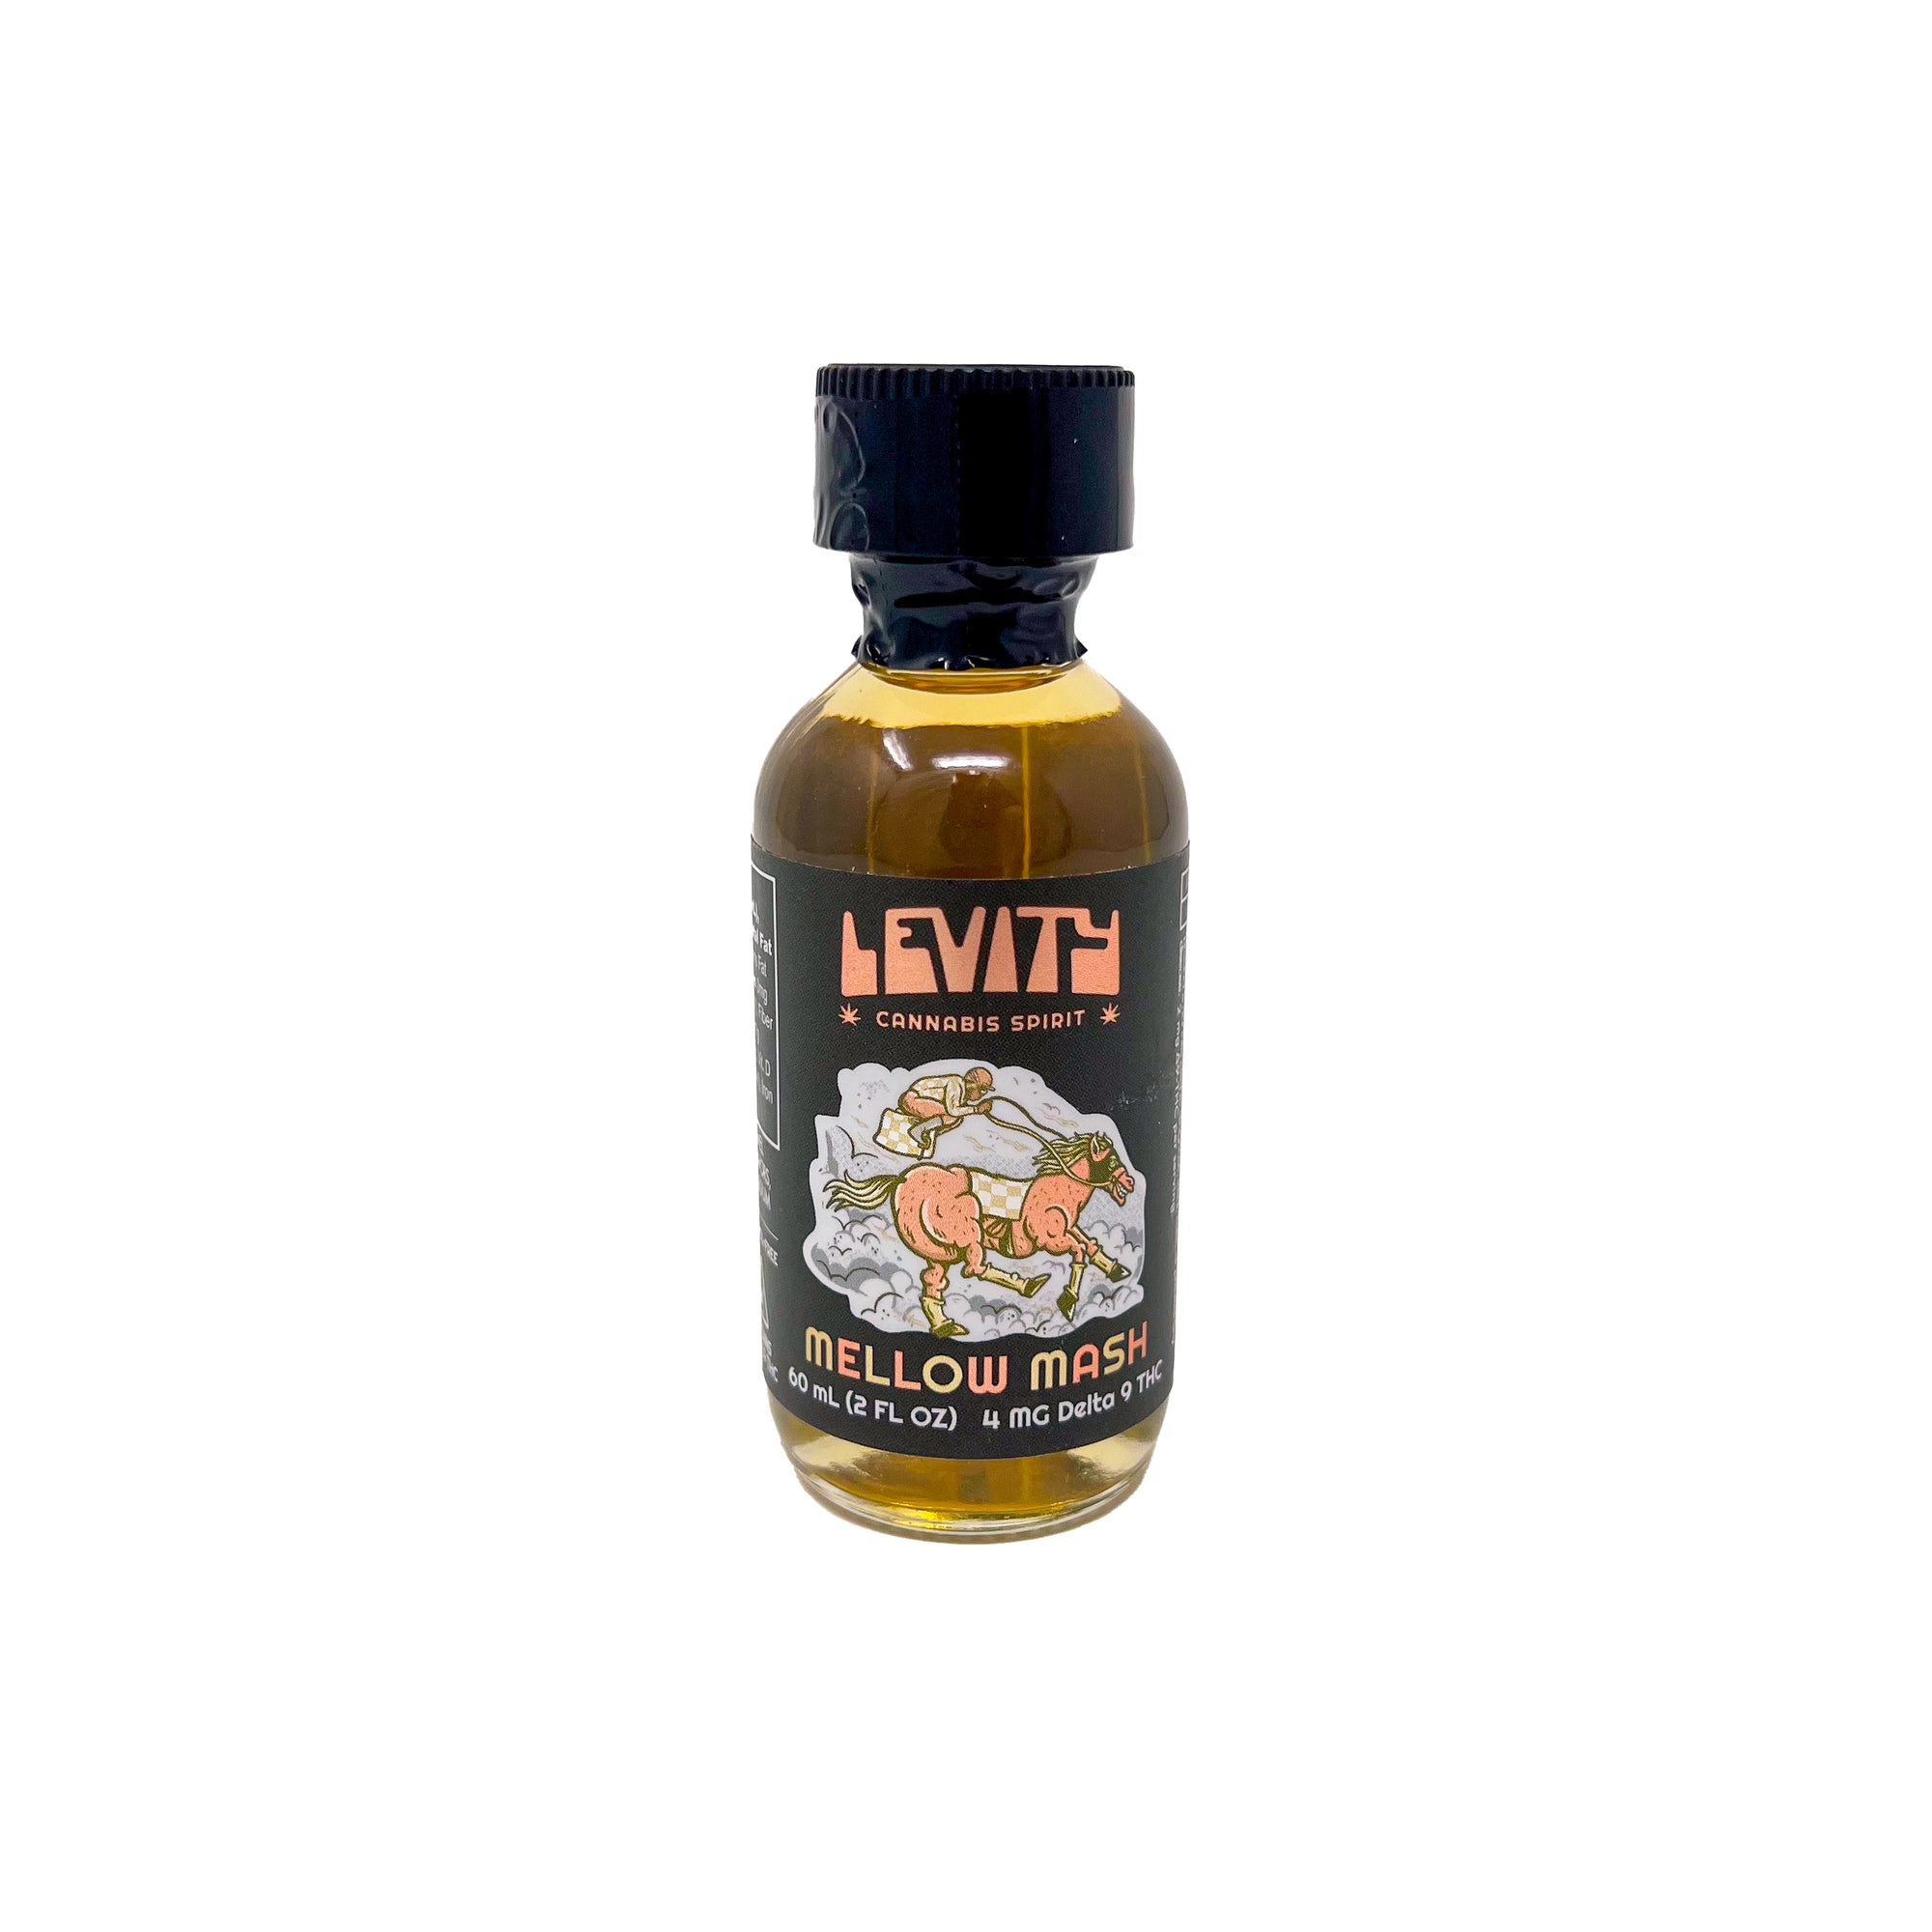 Levity Cannabis Spirit - Mellow Mash (Airplane Bottle)